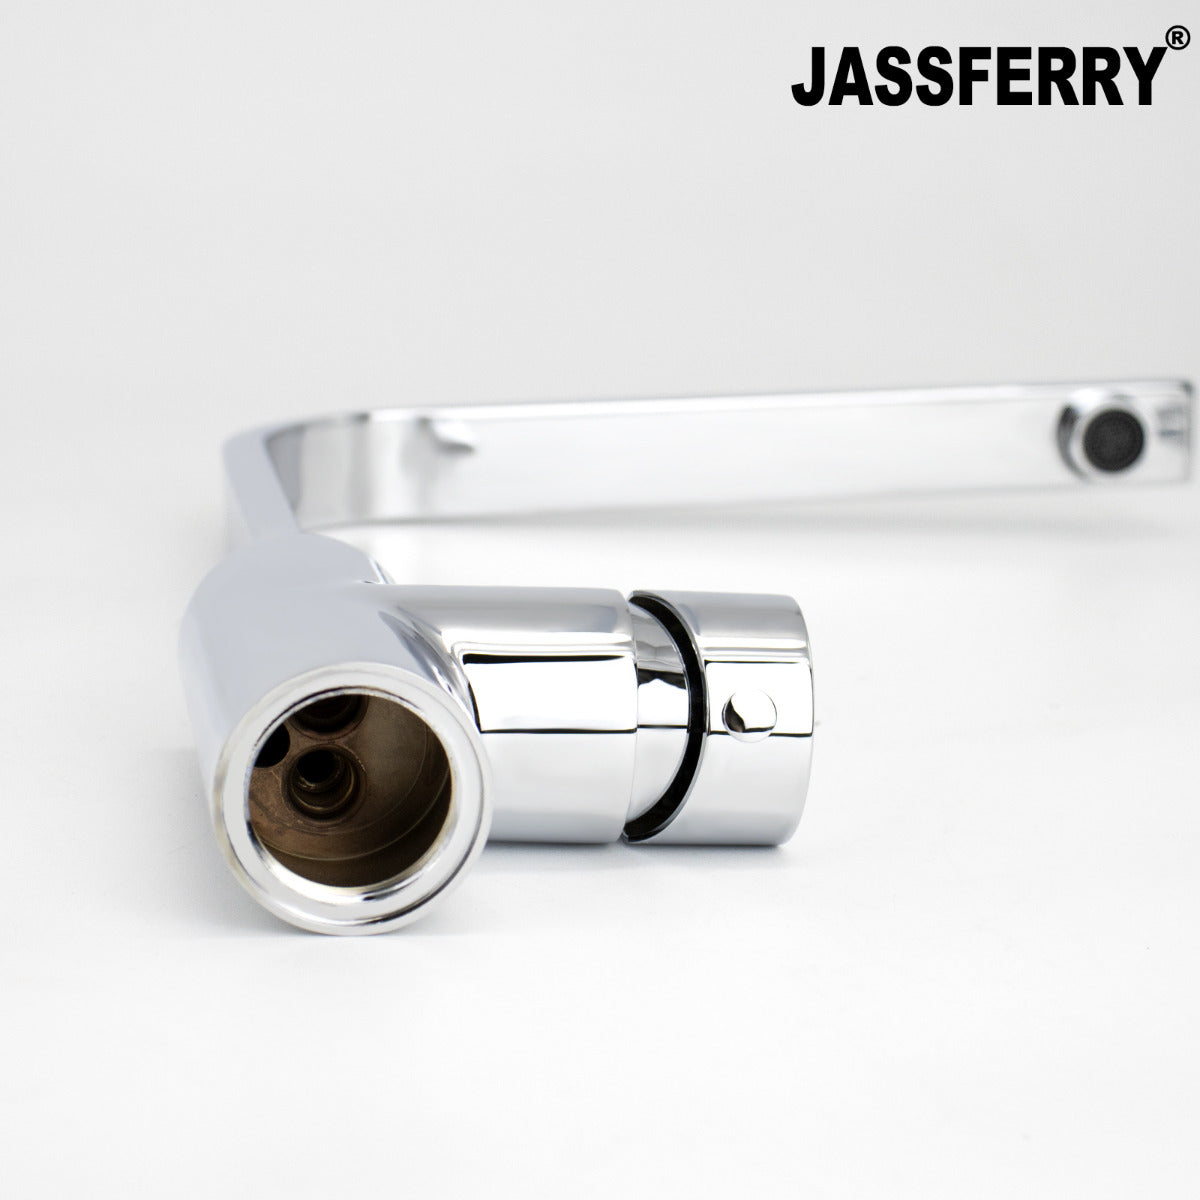 JassferryJASSFERRY Square Kitchen Sink Mixer Taps Chrome Modern Single Rectangle LeverKitchen taps